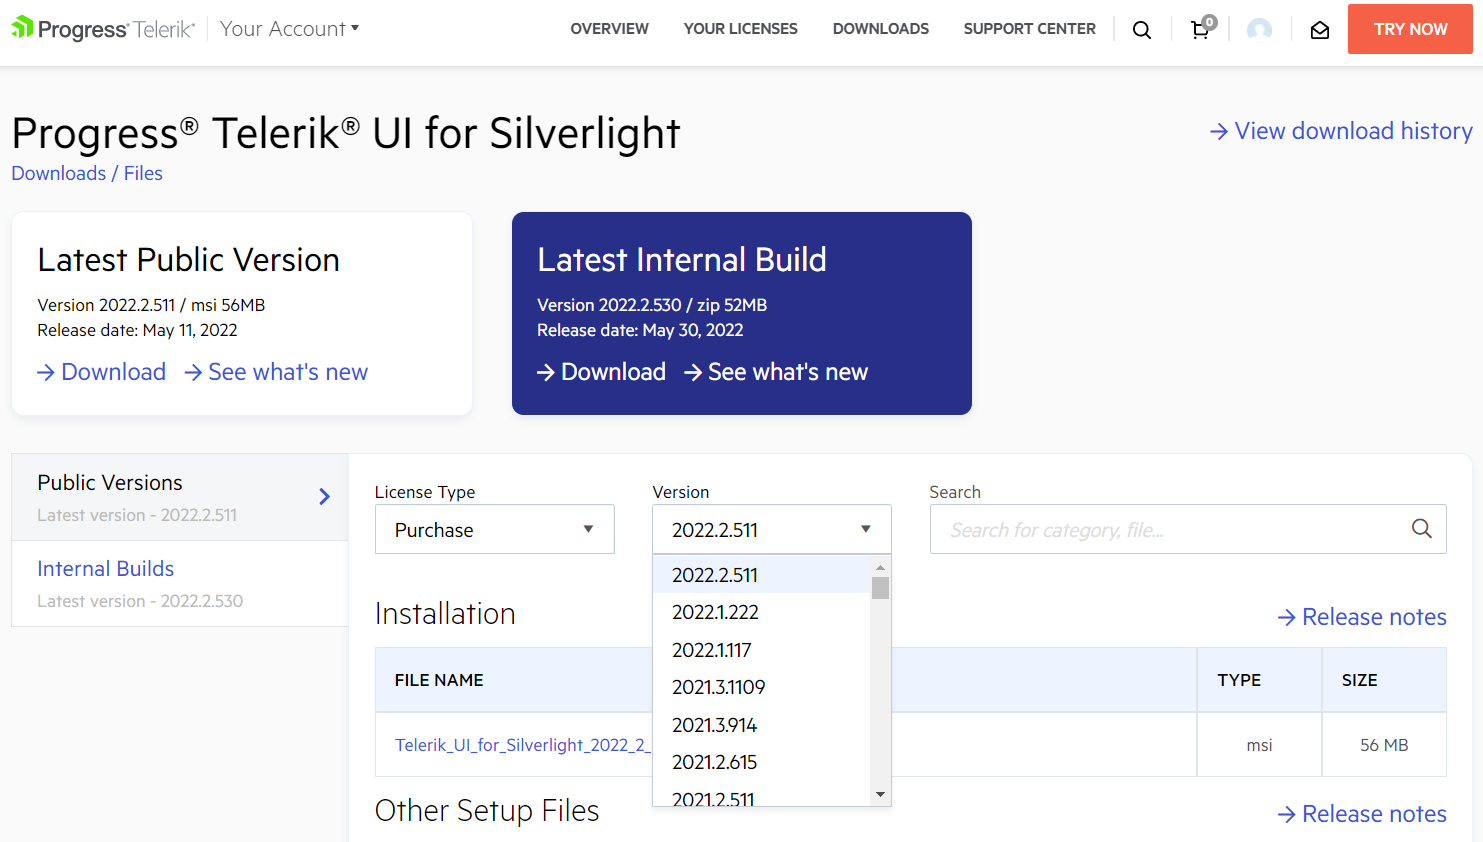 Silverlight Progress Site Telerik UI for Silverlight Available Versions